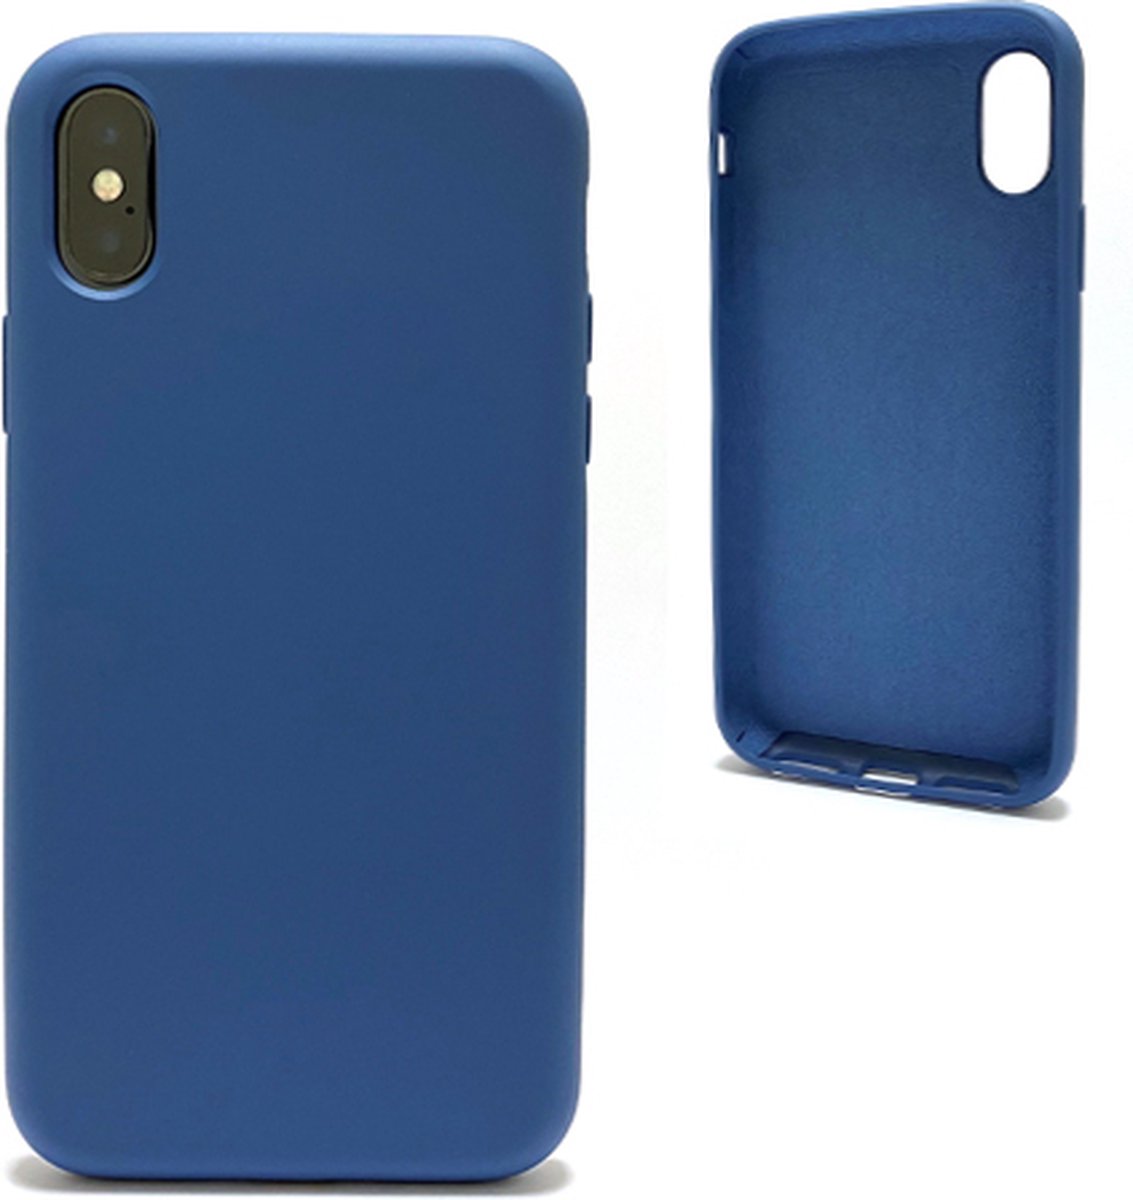 iNcentive Soft Gelly Case Galaxy A51 cobalt blue